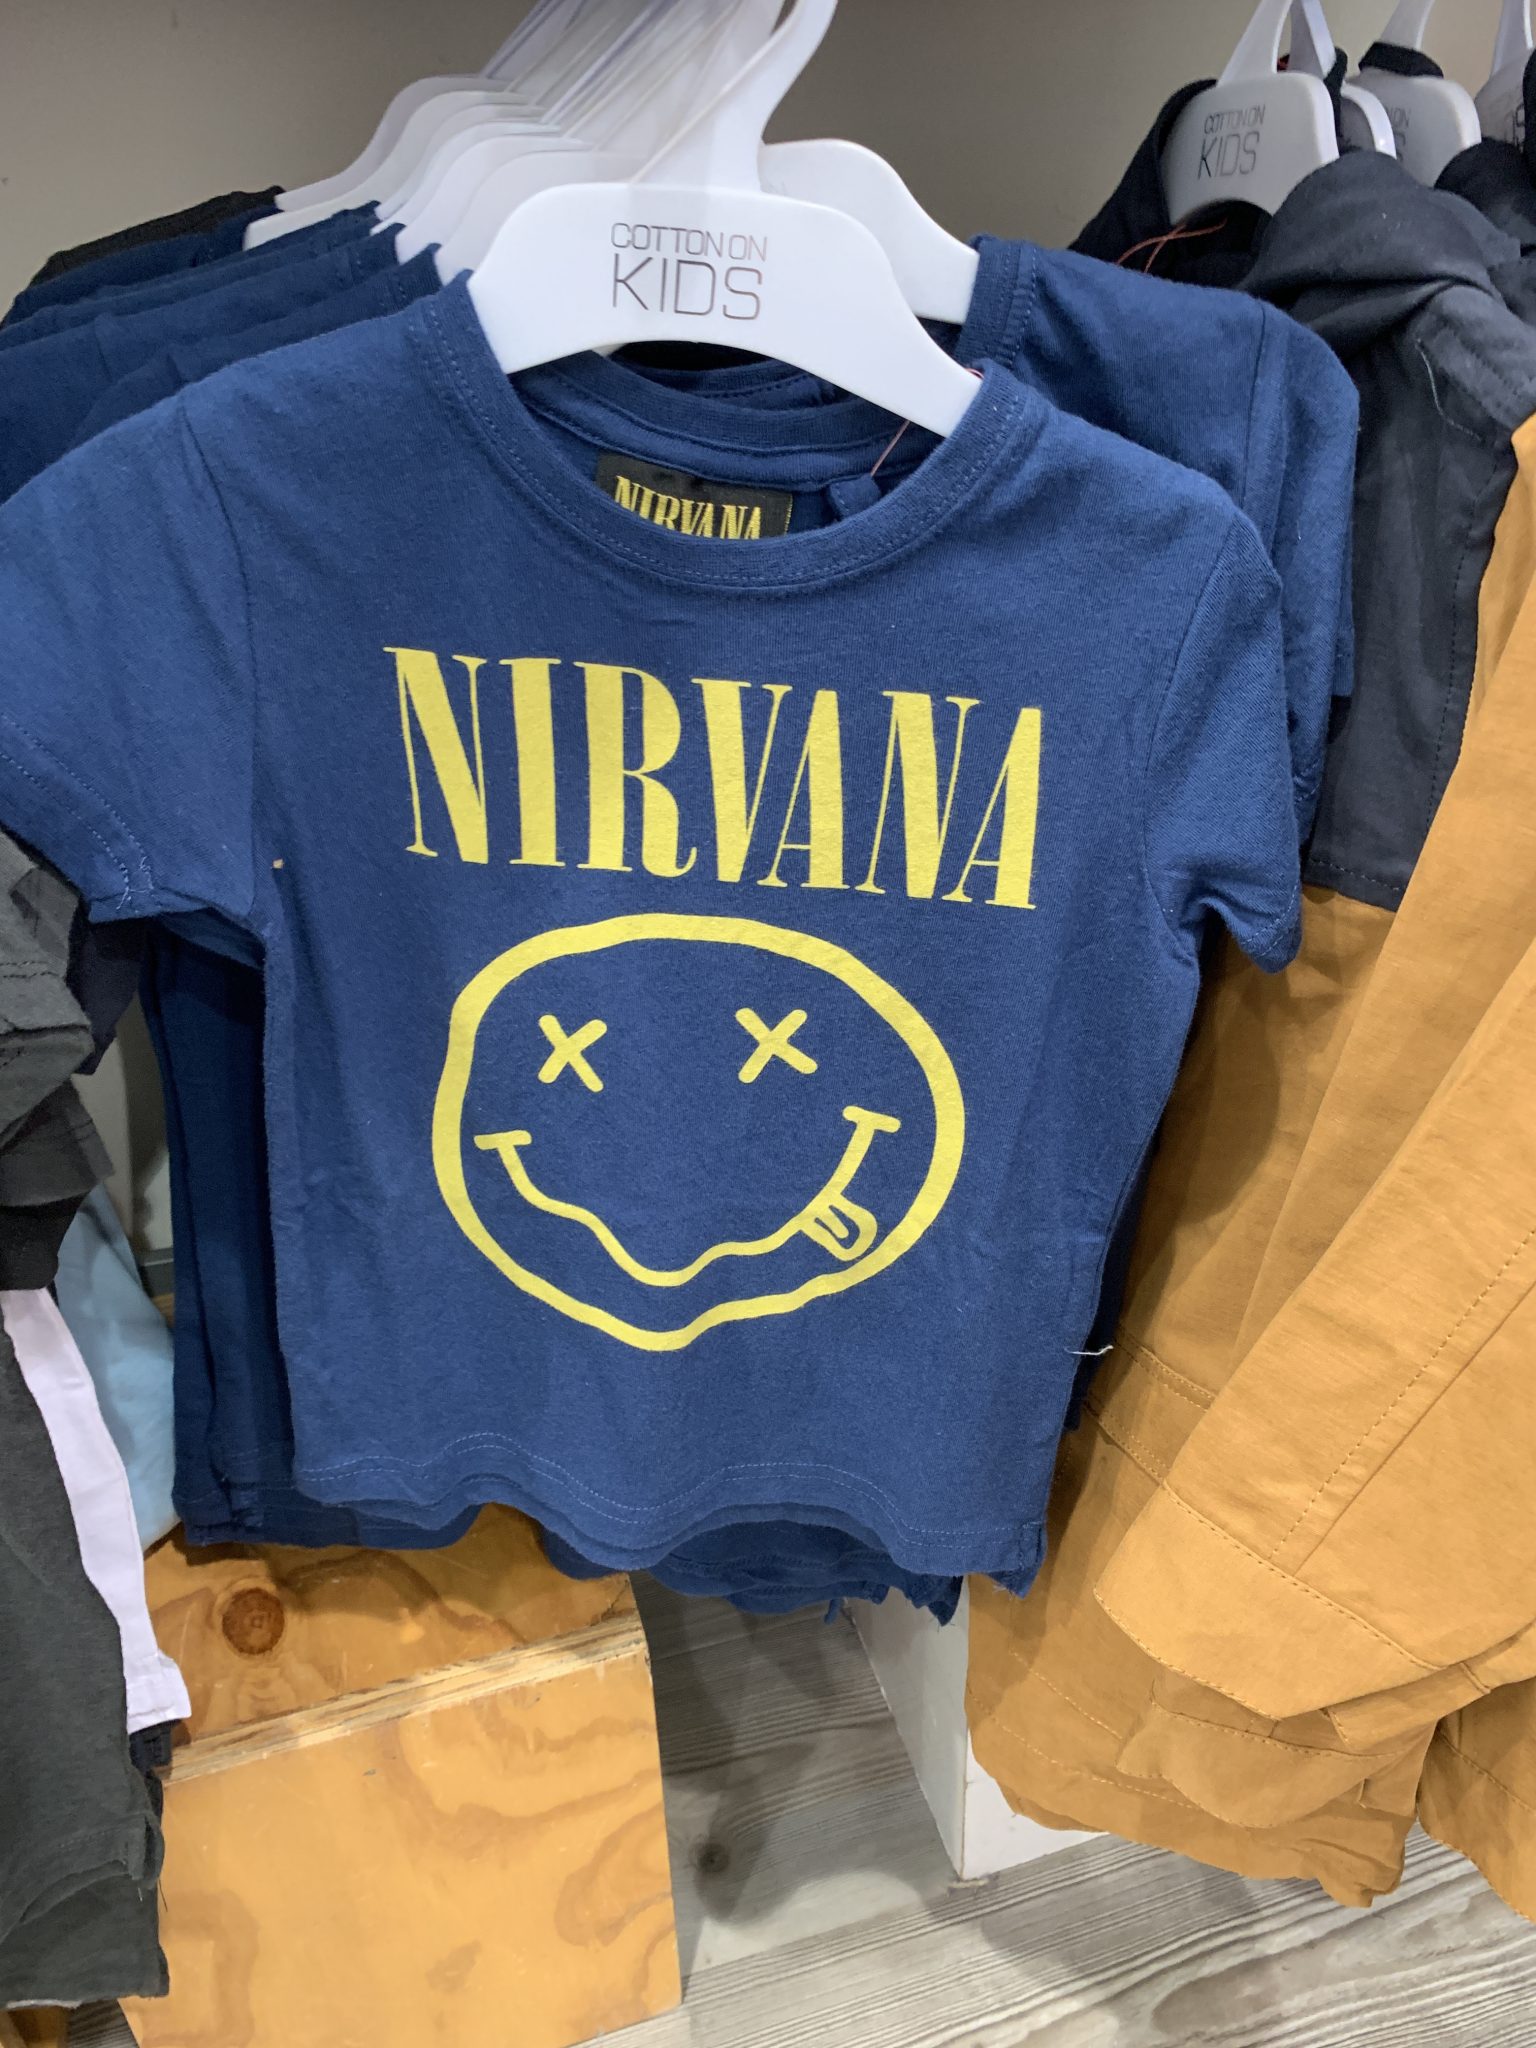 Cotton On Kids nirvana shirt